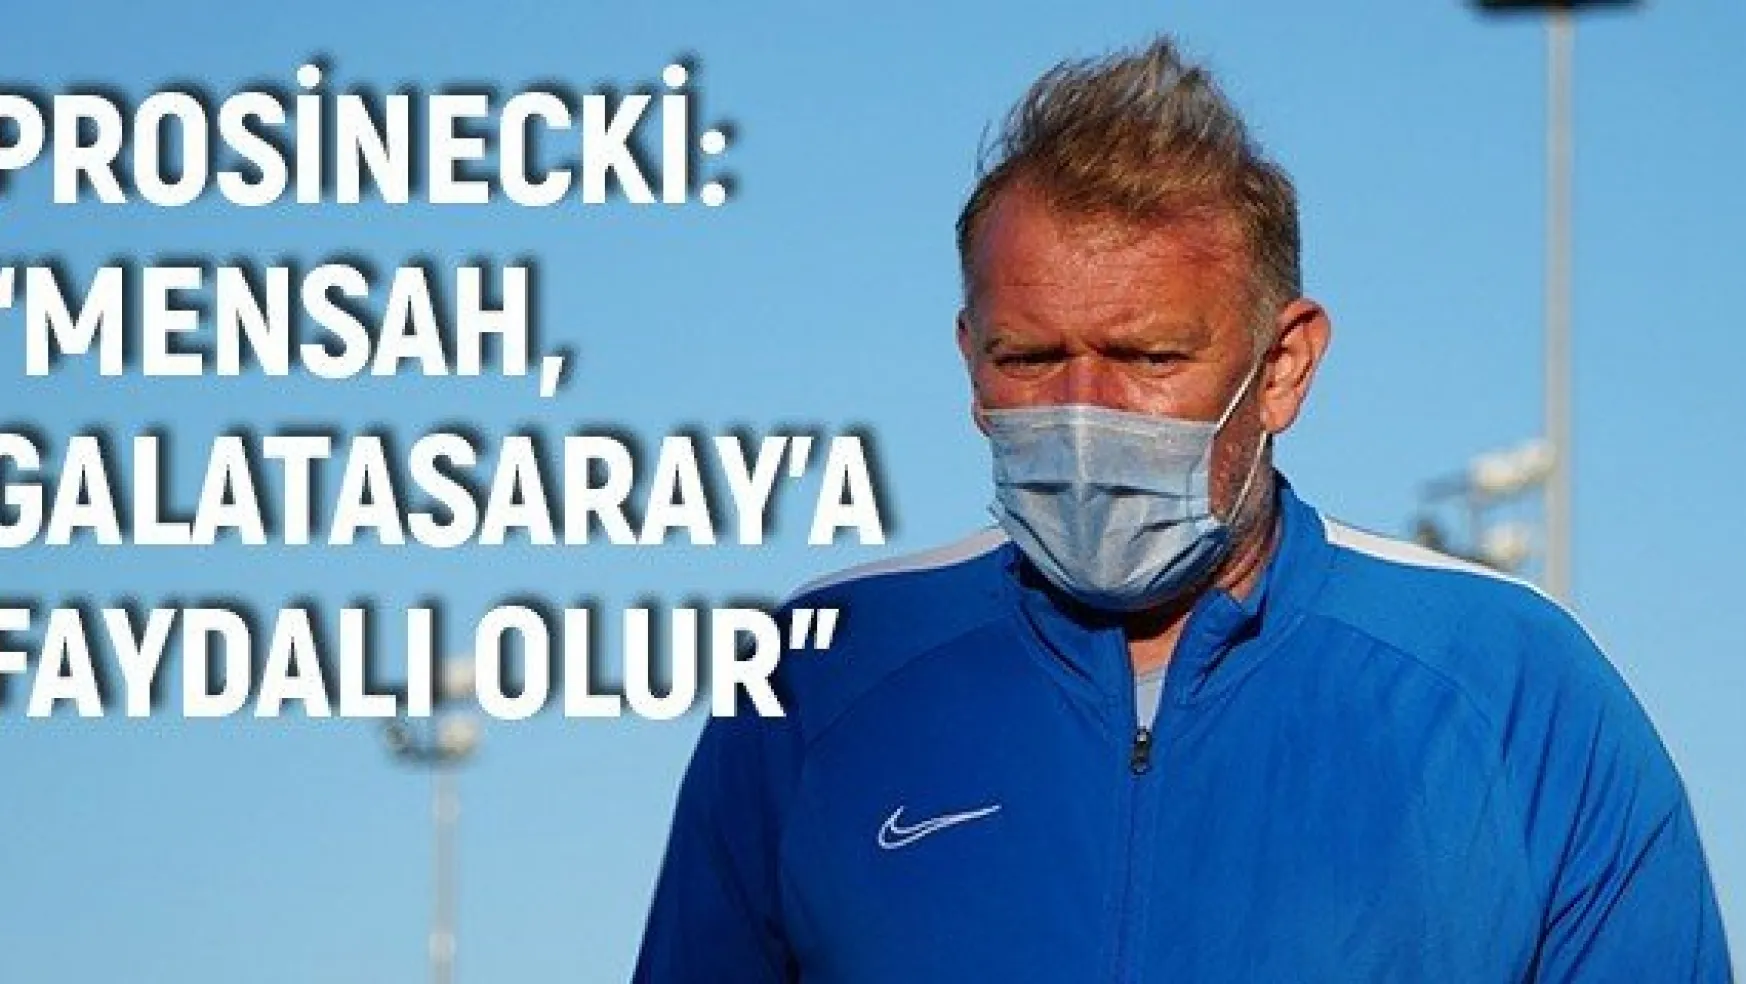 Prosinecki: 'Mensah, Galatasaray'a faydalı olur'